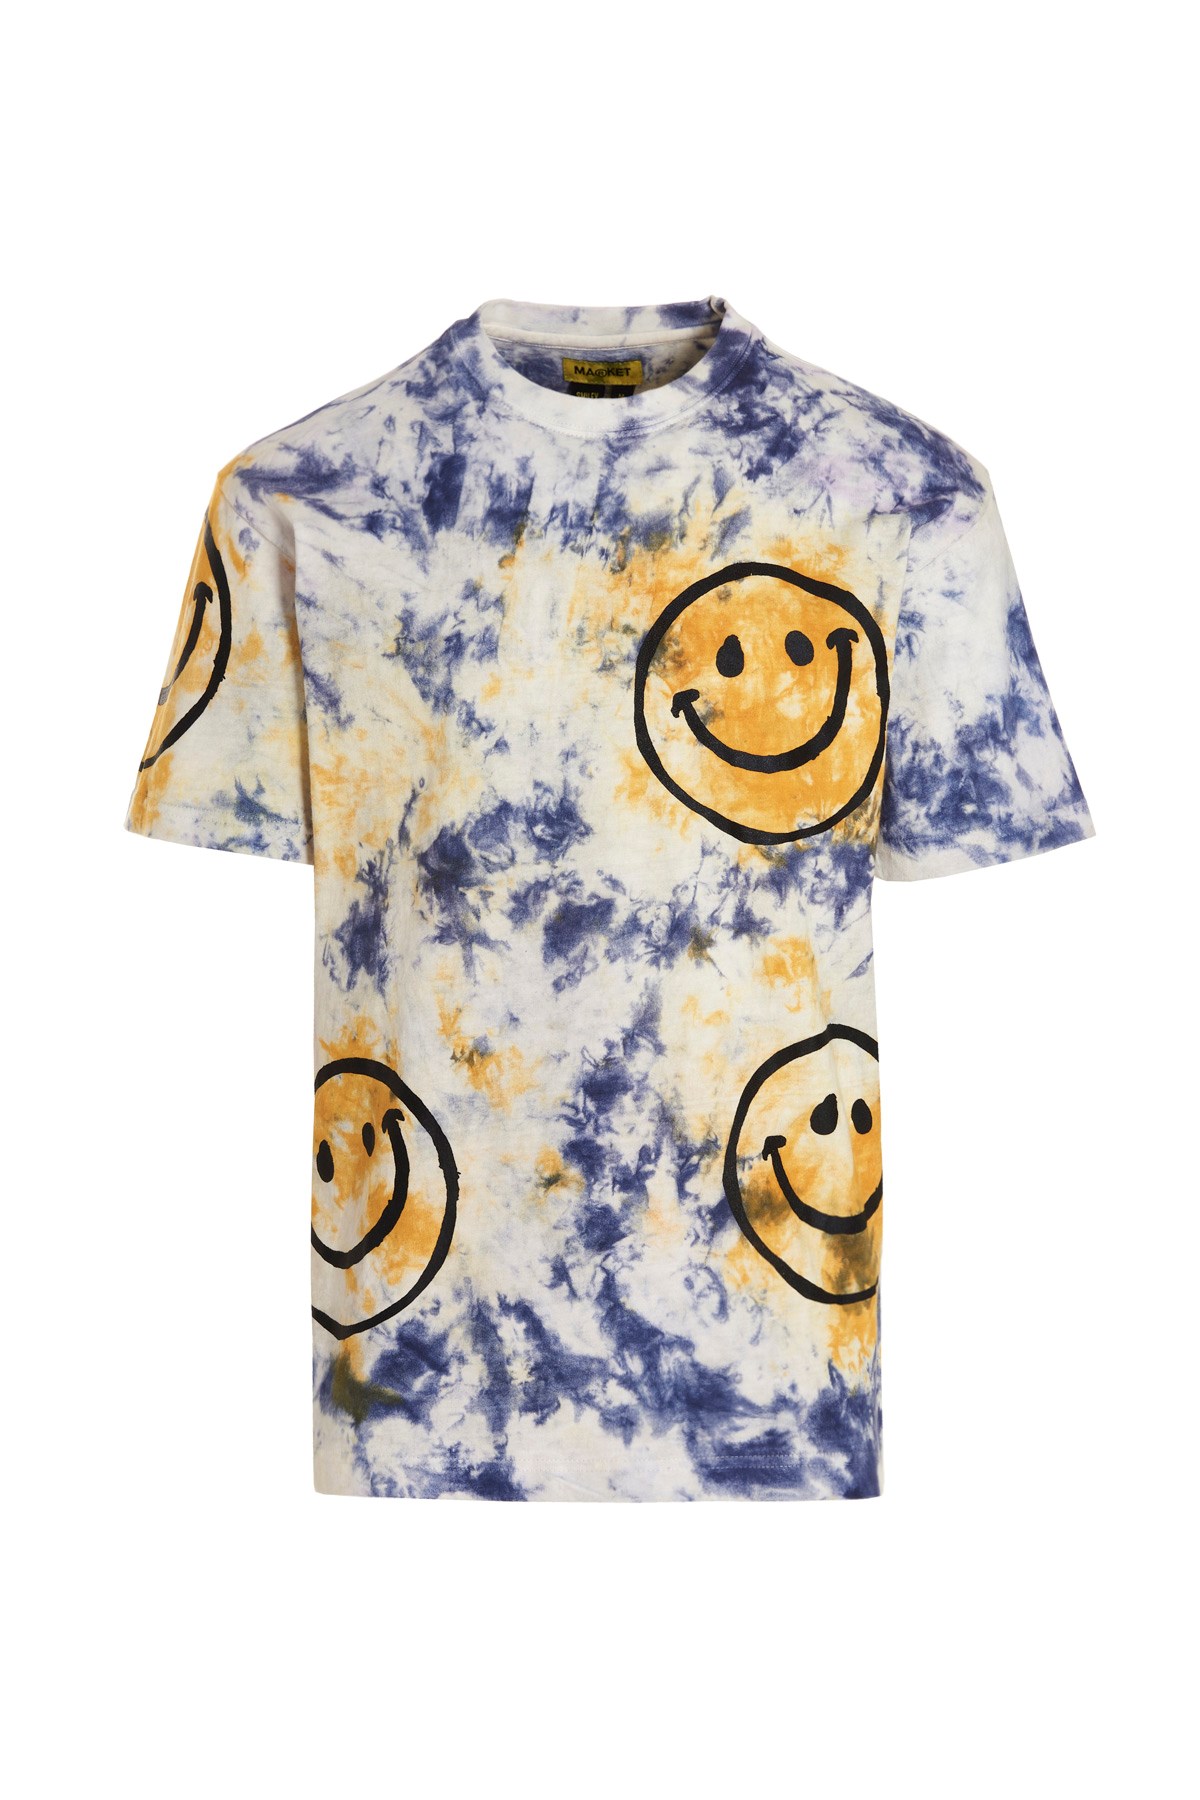 MARKET T-Shirt 'Smiley Sun Day'